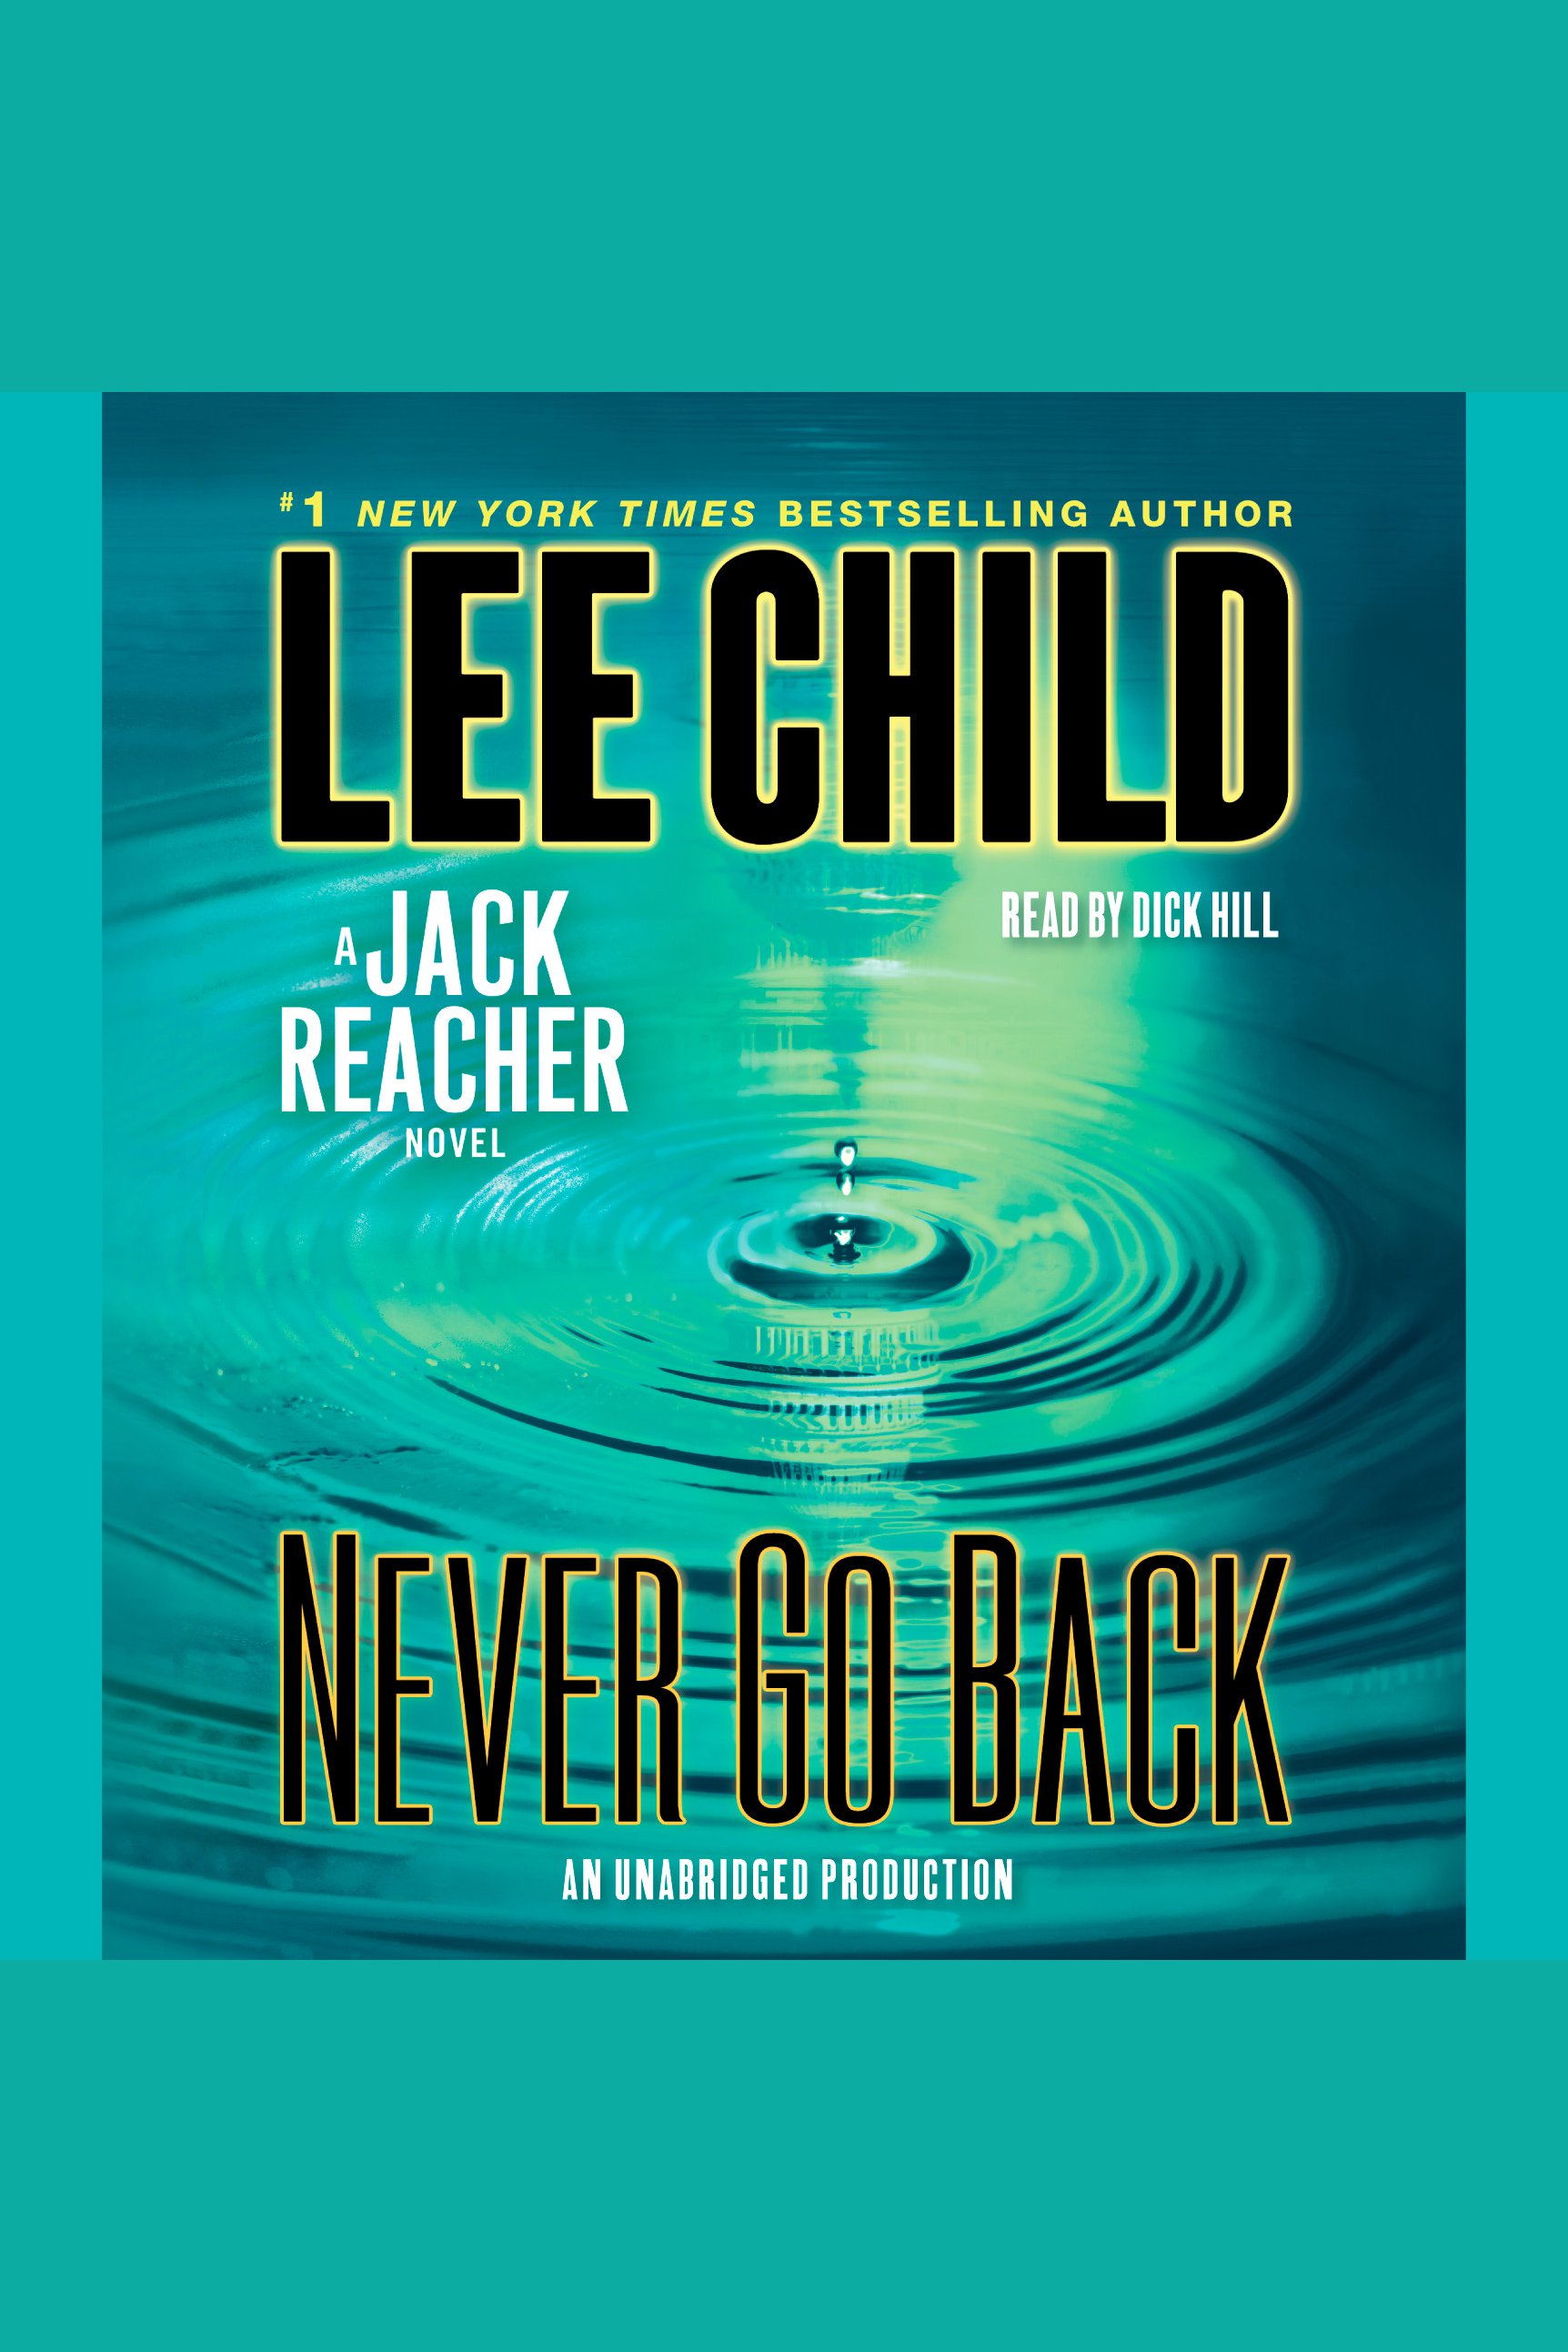 Never go back a Jack Reacher novel cover image